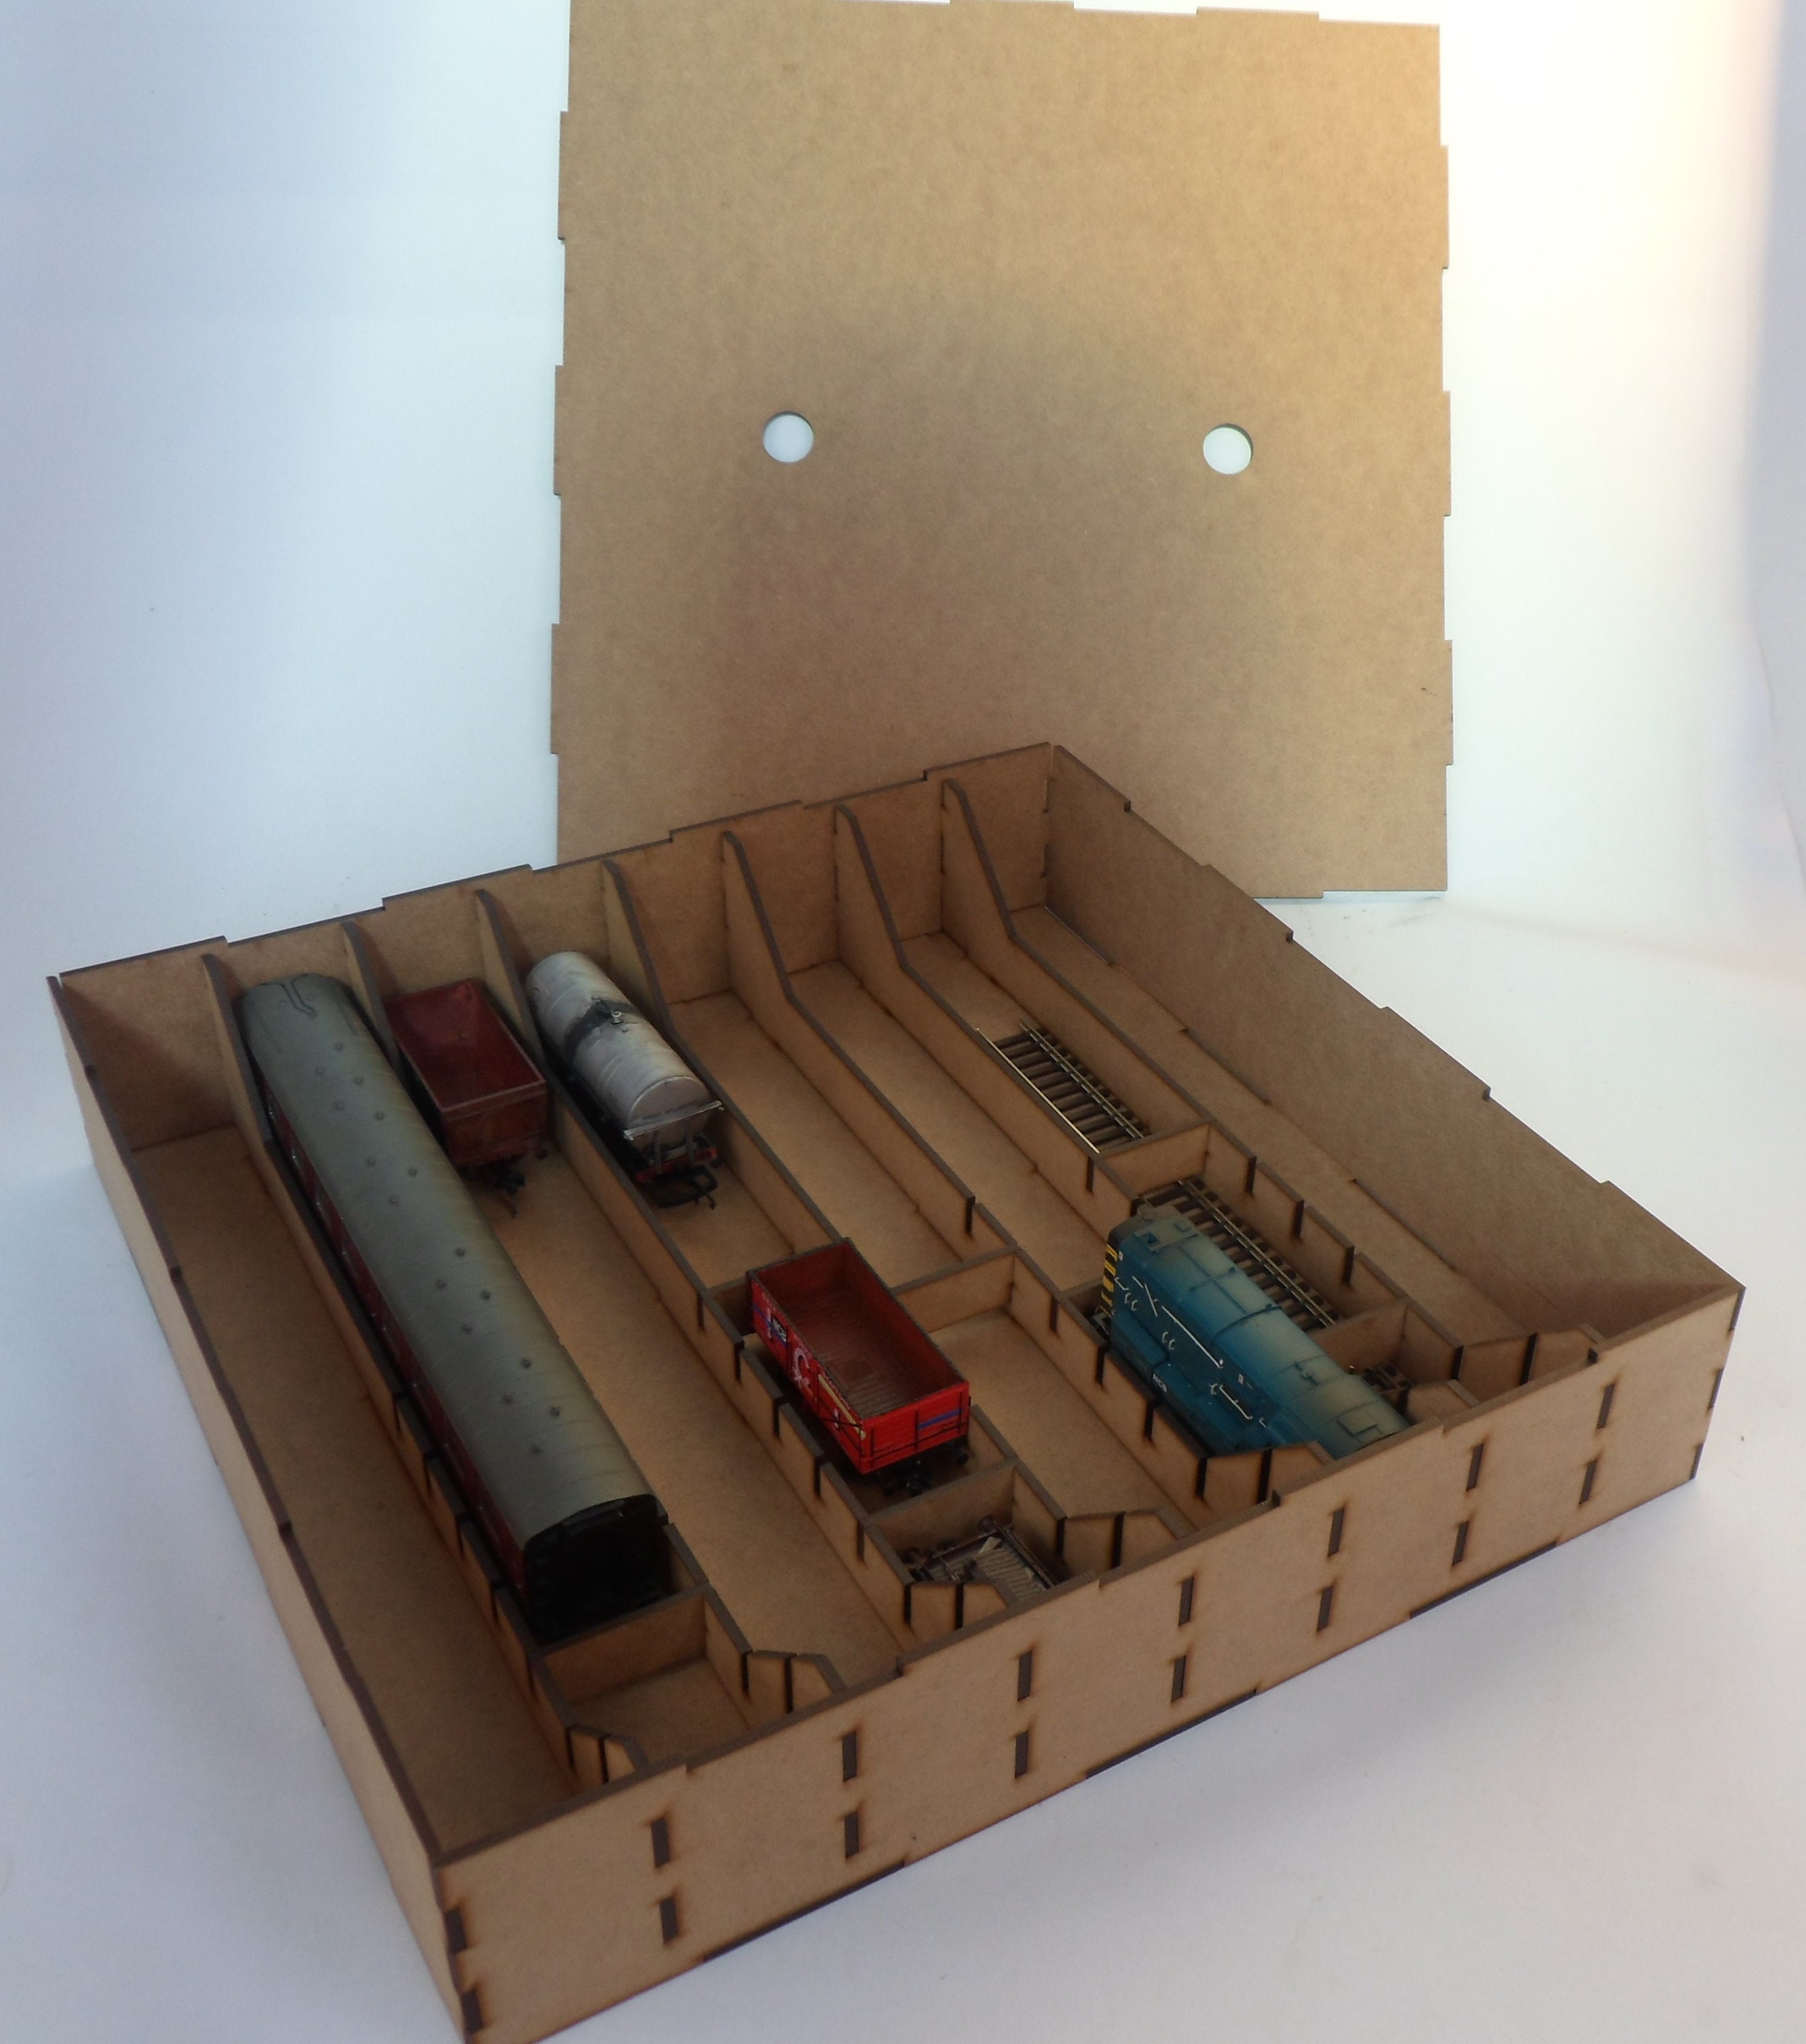 00 Gauge Model Railway Storage & Transportaton Box with Train Spacers MDF